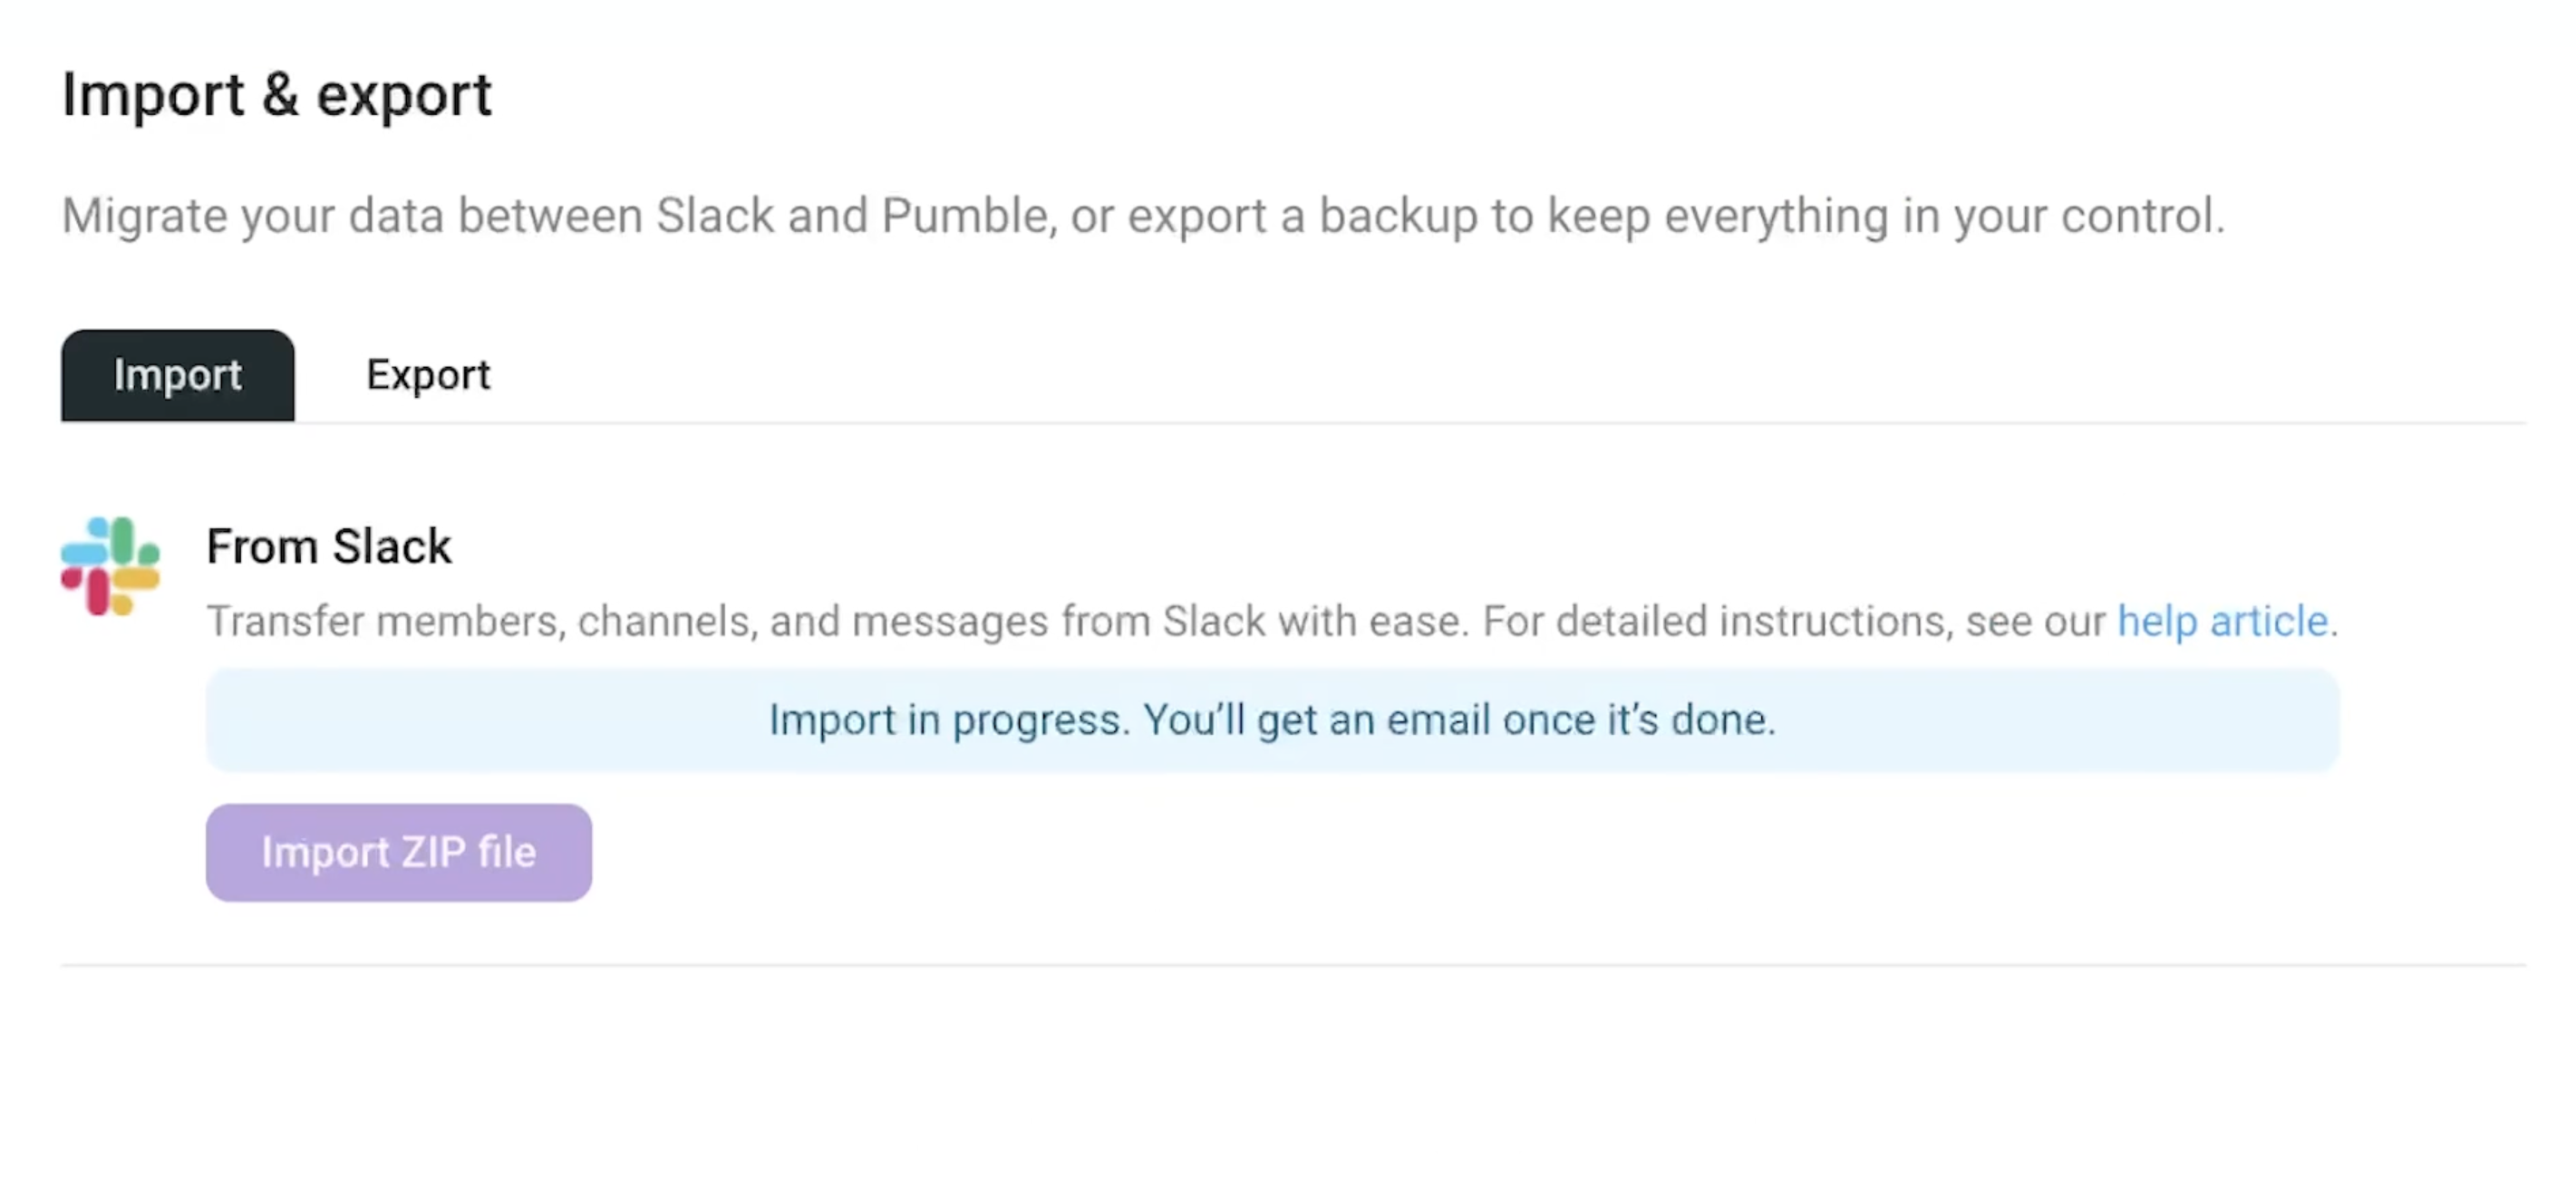 Start importing files from Slack